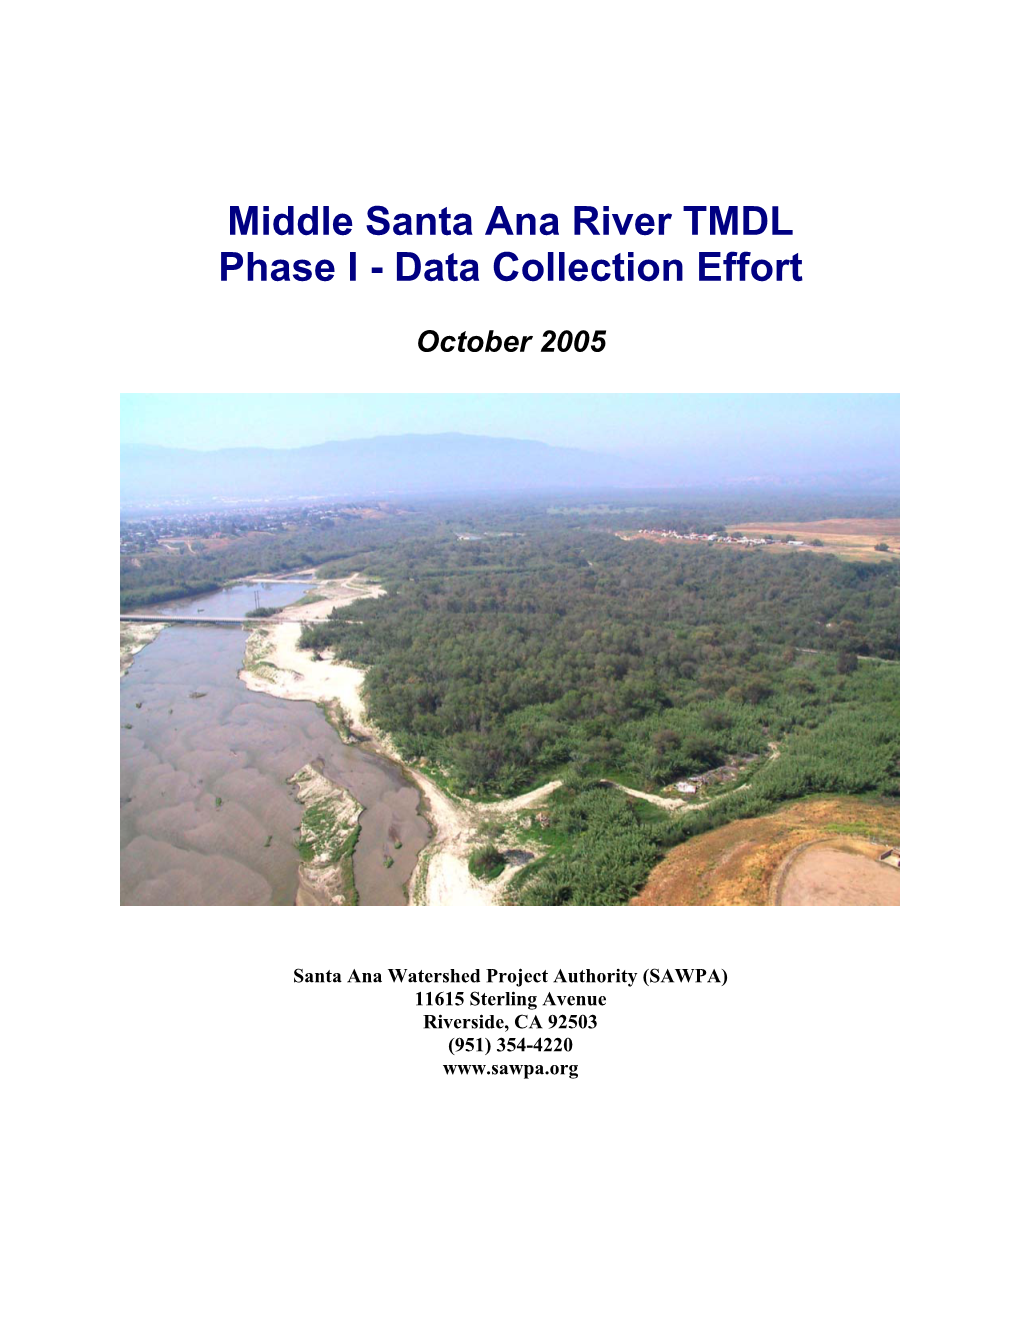 Middle Santa Ana River TMDL Phase I - Data Collection Effort